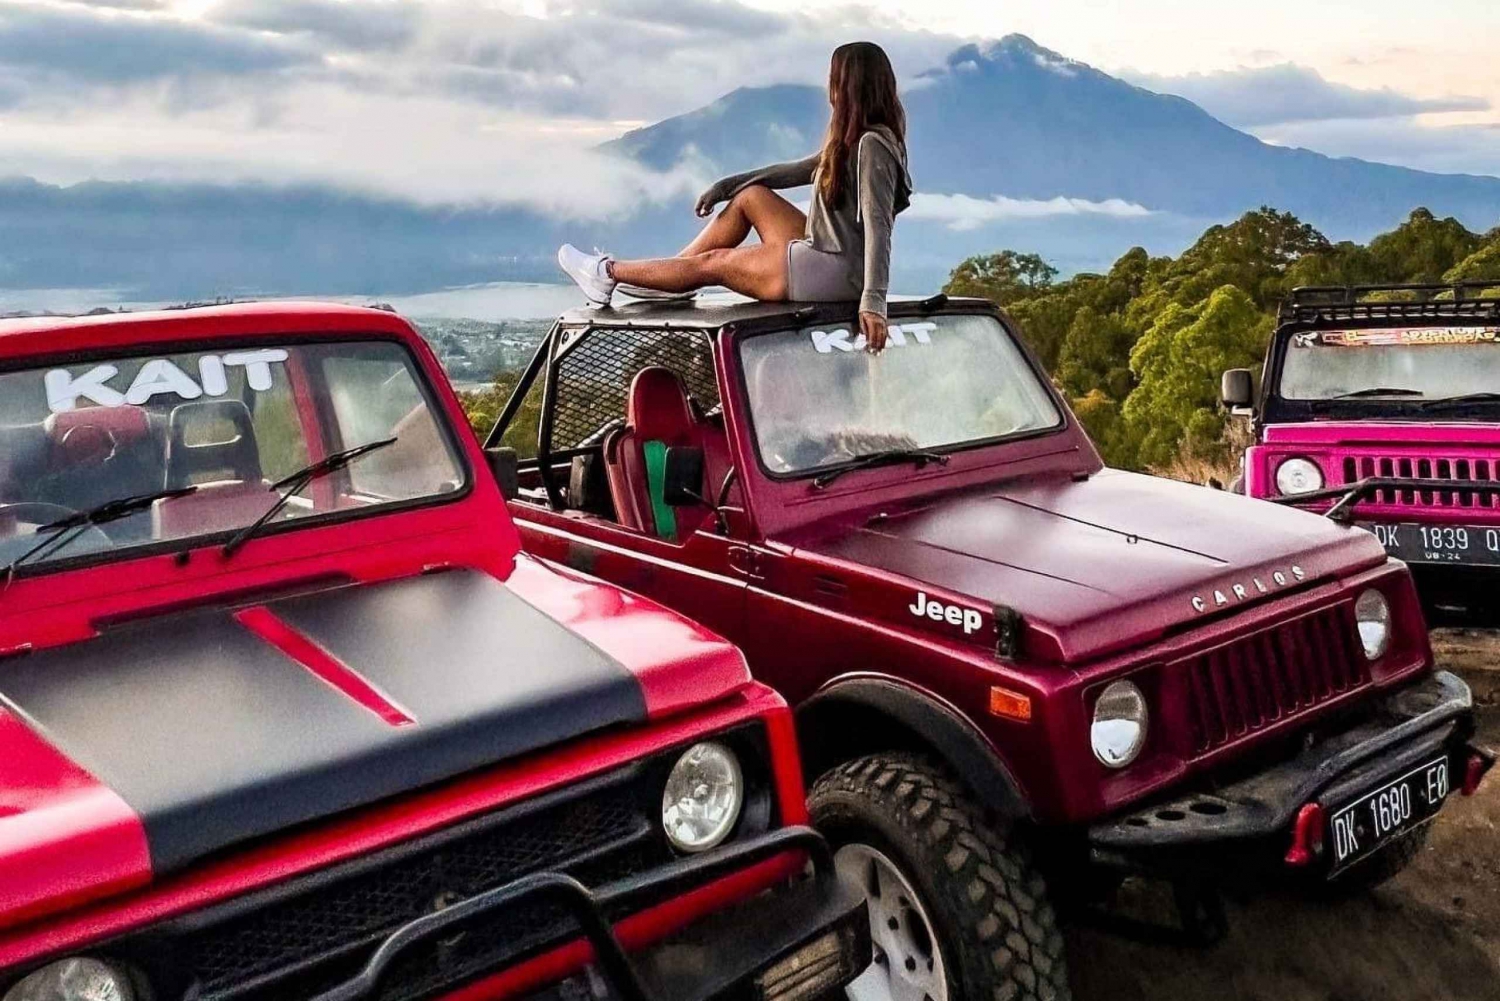 Bali: Mount Batur Jeep Sunrise - All Inclusive Tour